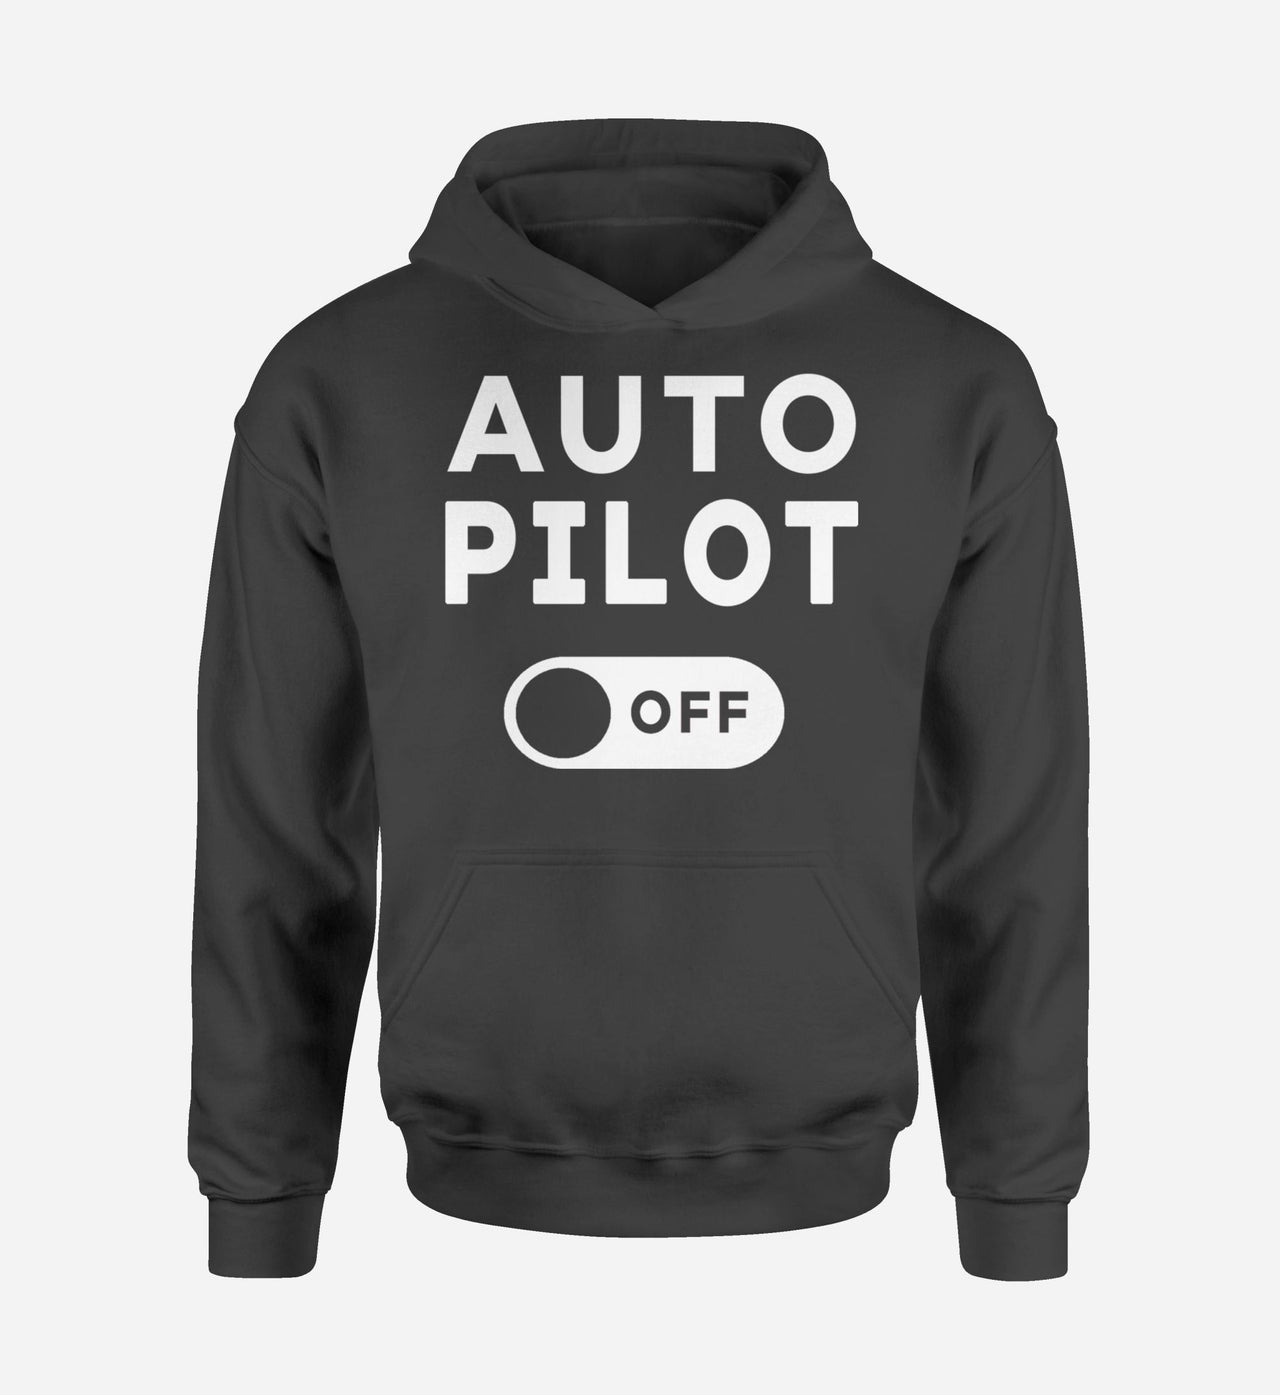 Auto Pilot Off Designed Hoodies